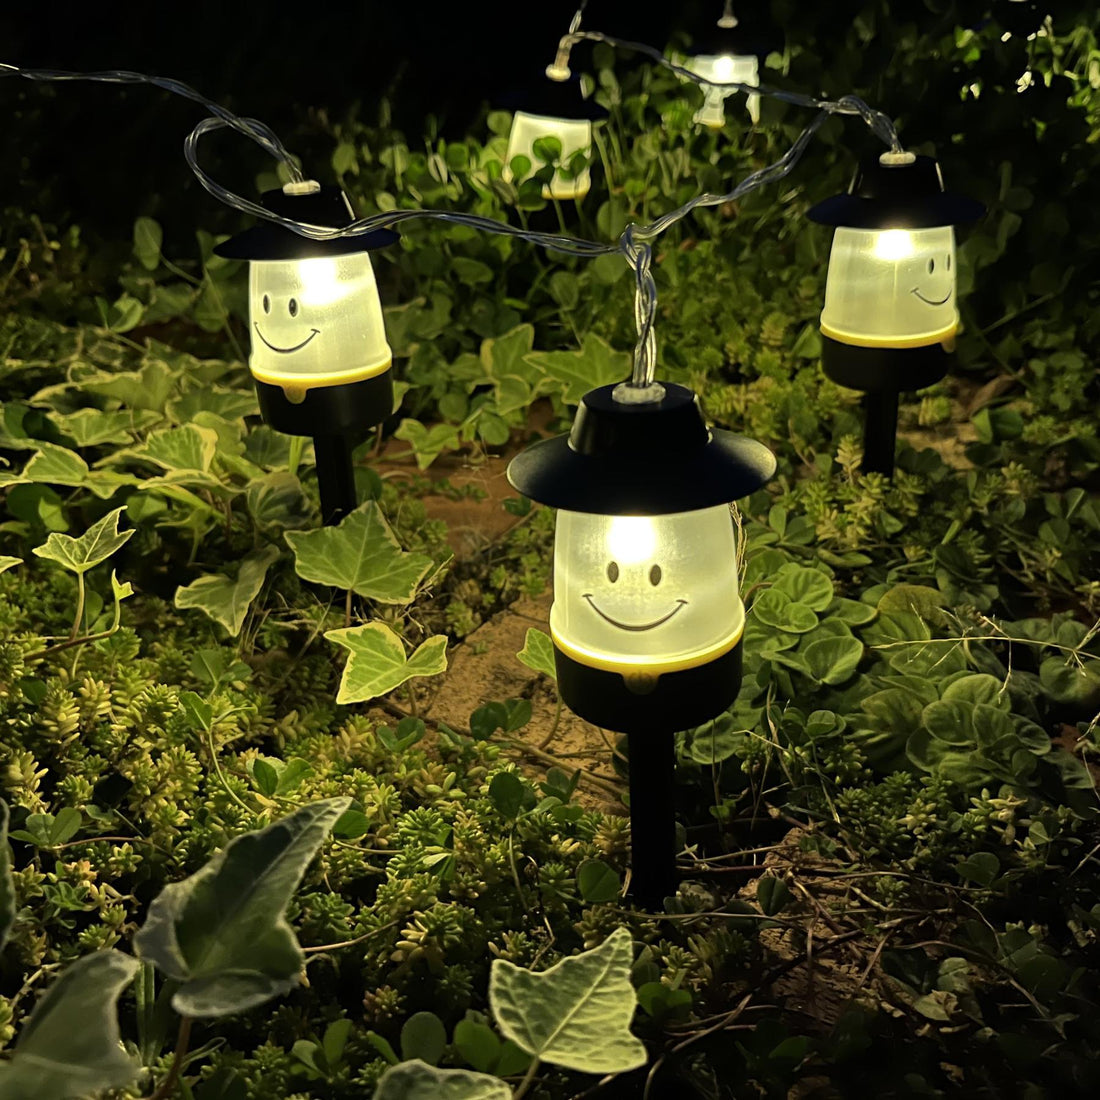 SMiLE LED Lantern 2 Way Garland Waterproof (Battery Operated)